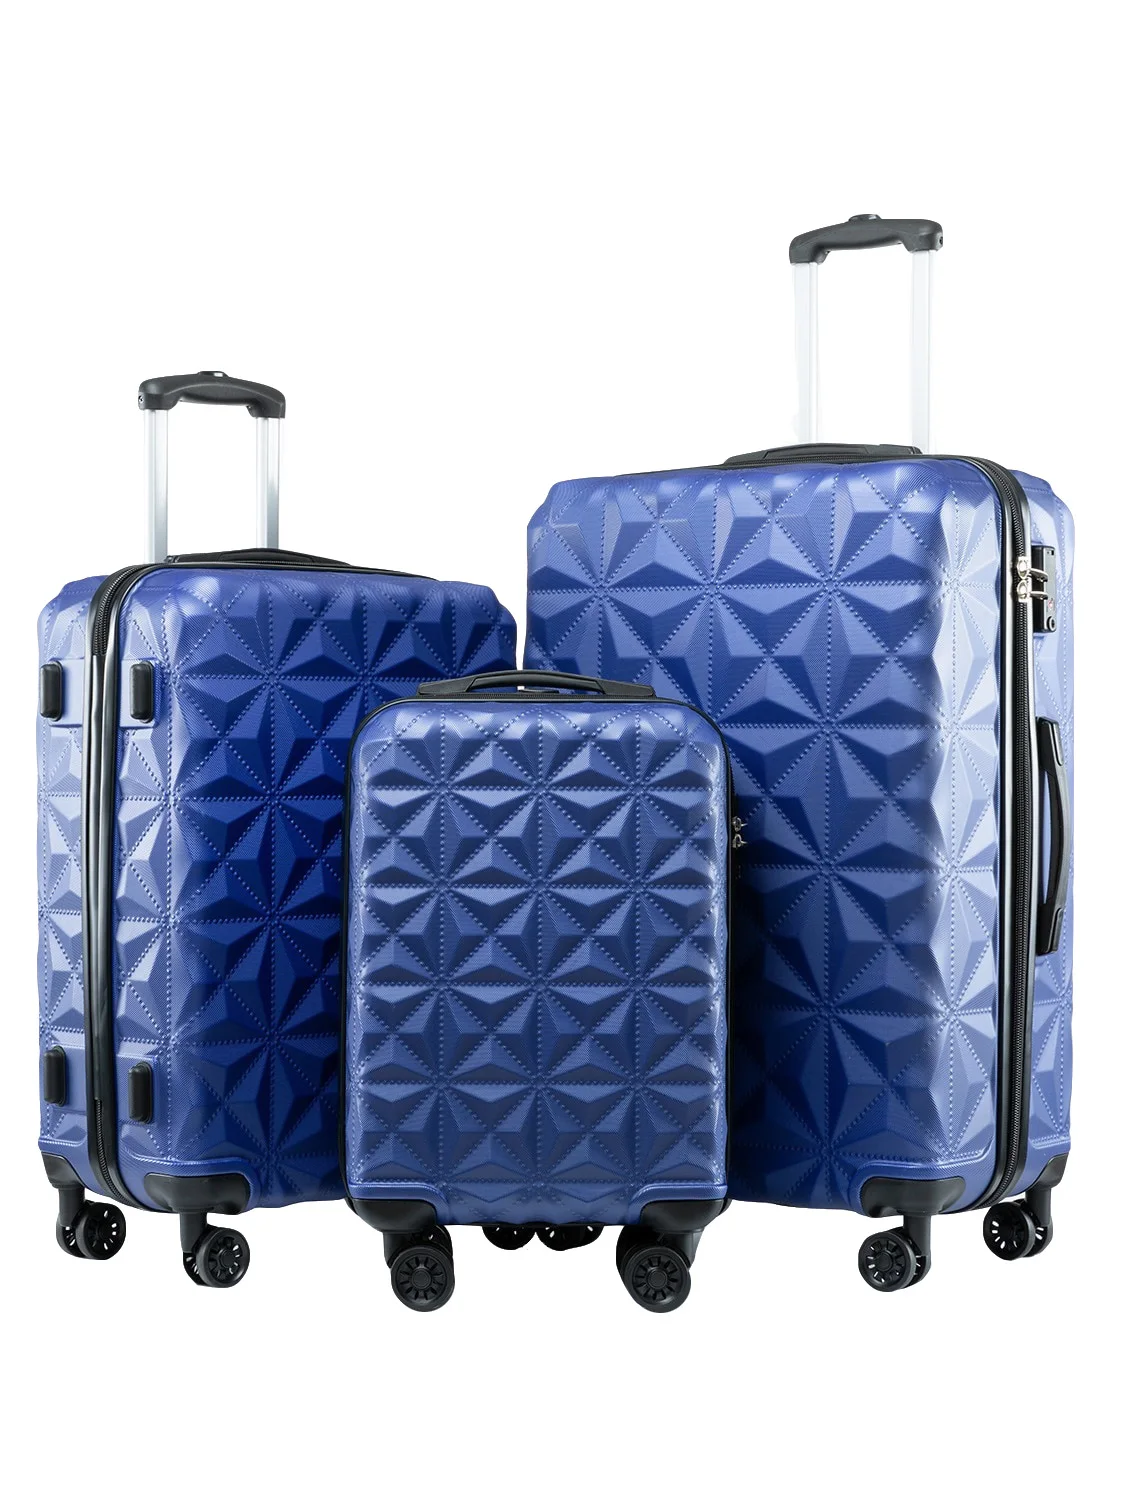 Seanshow набор багажа 3 шт. чехол на колесиках для мужчин и женщин TSA замок Спиннер колеса костюм чехол для путешествий 18-24-28 дюймов